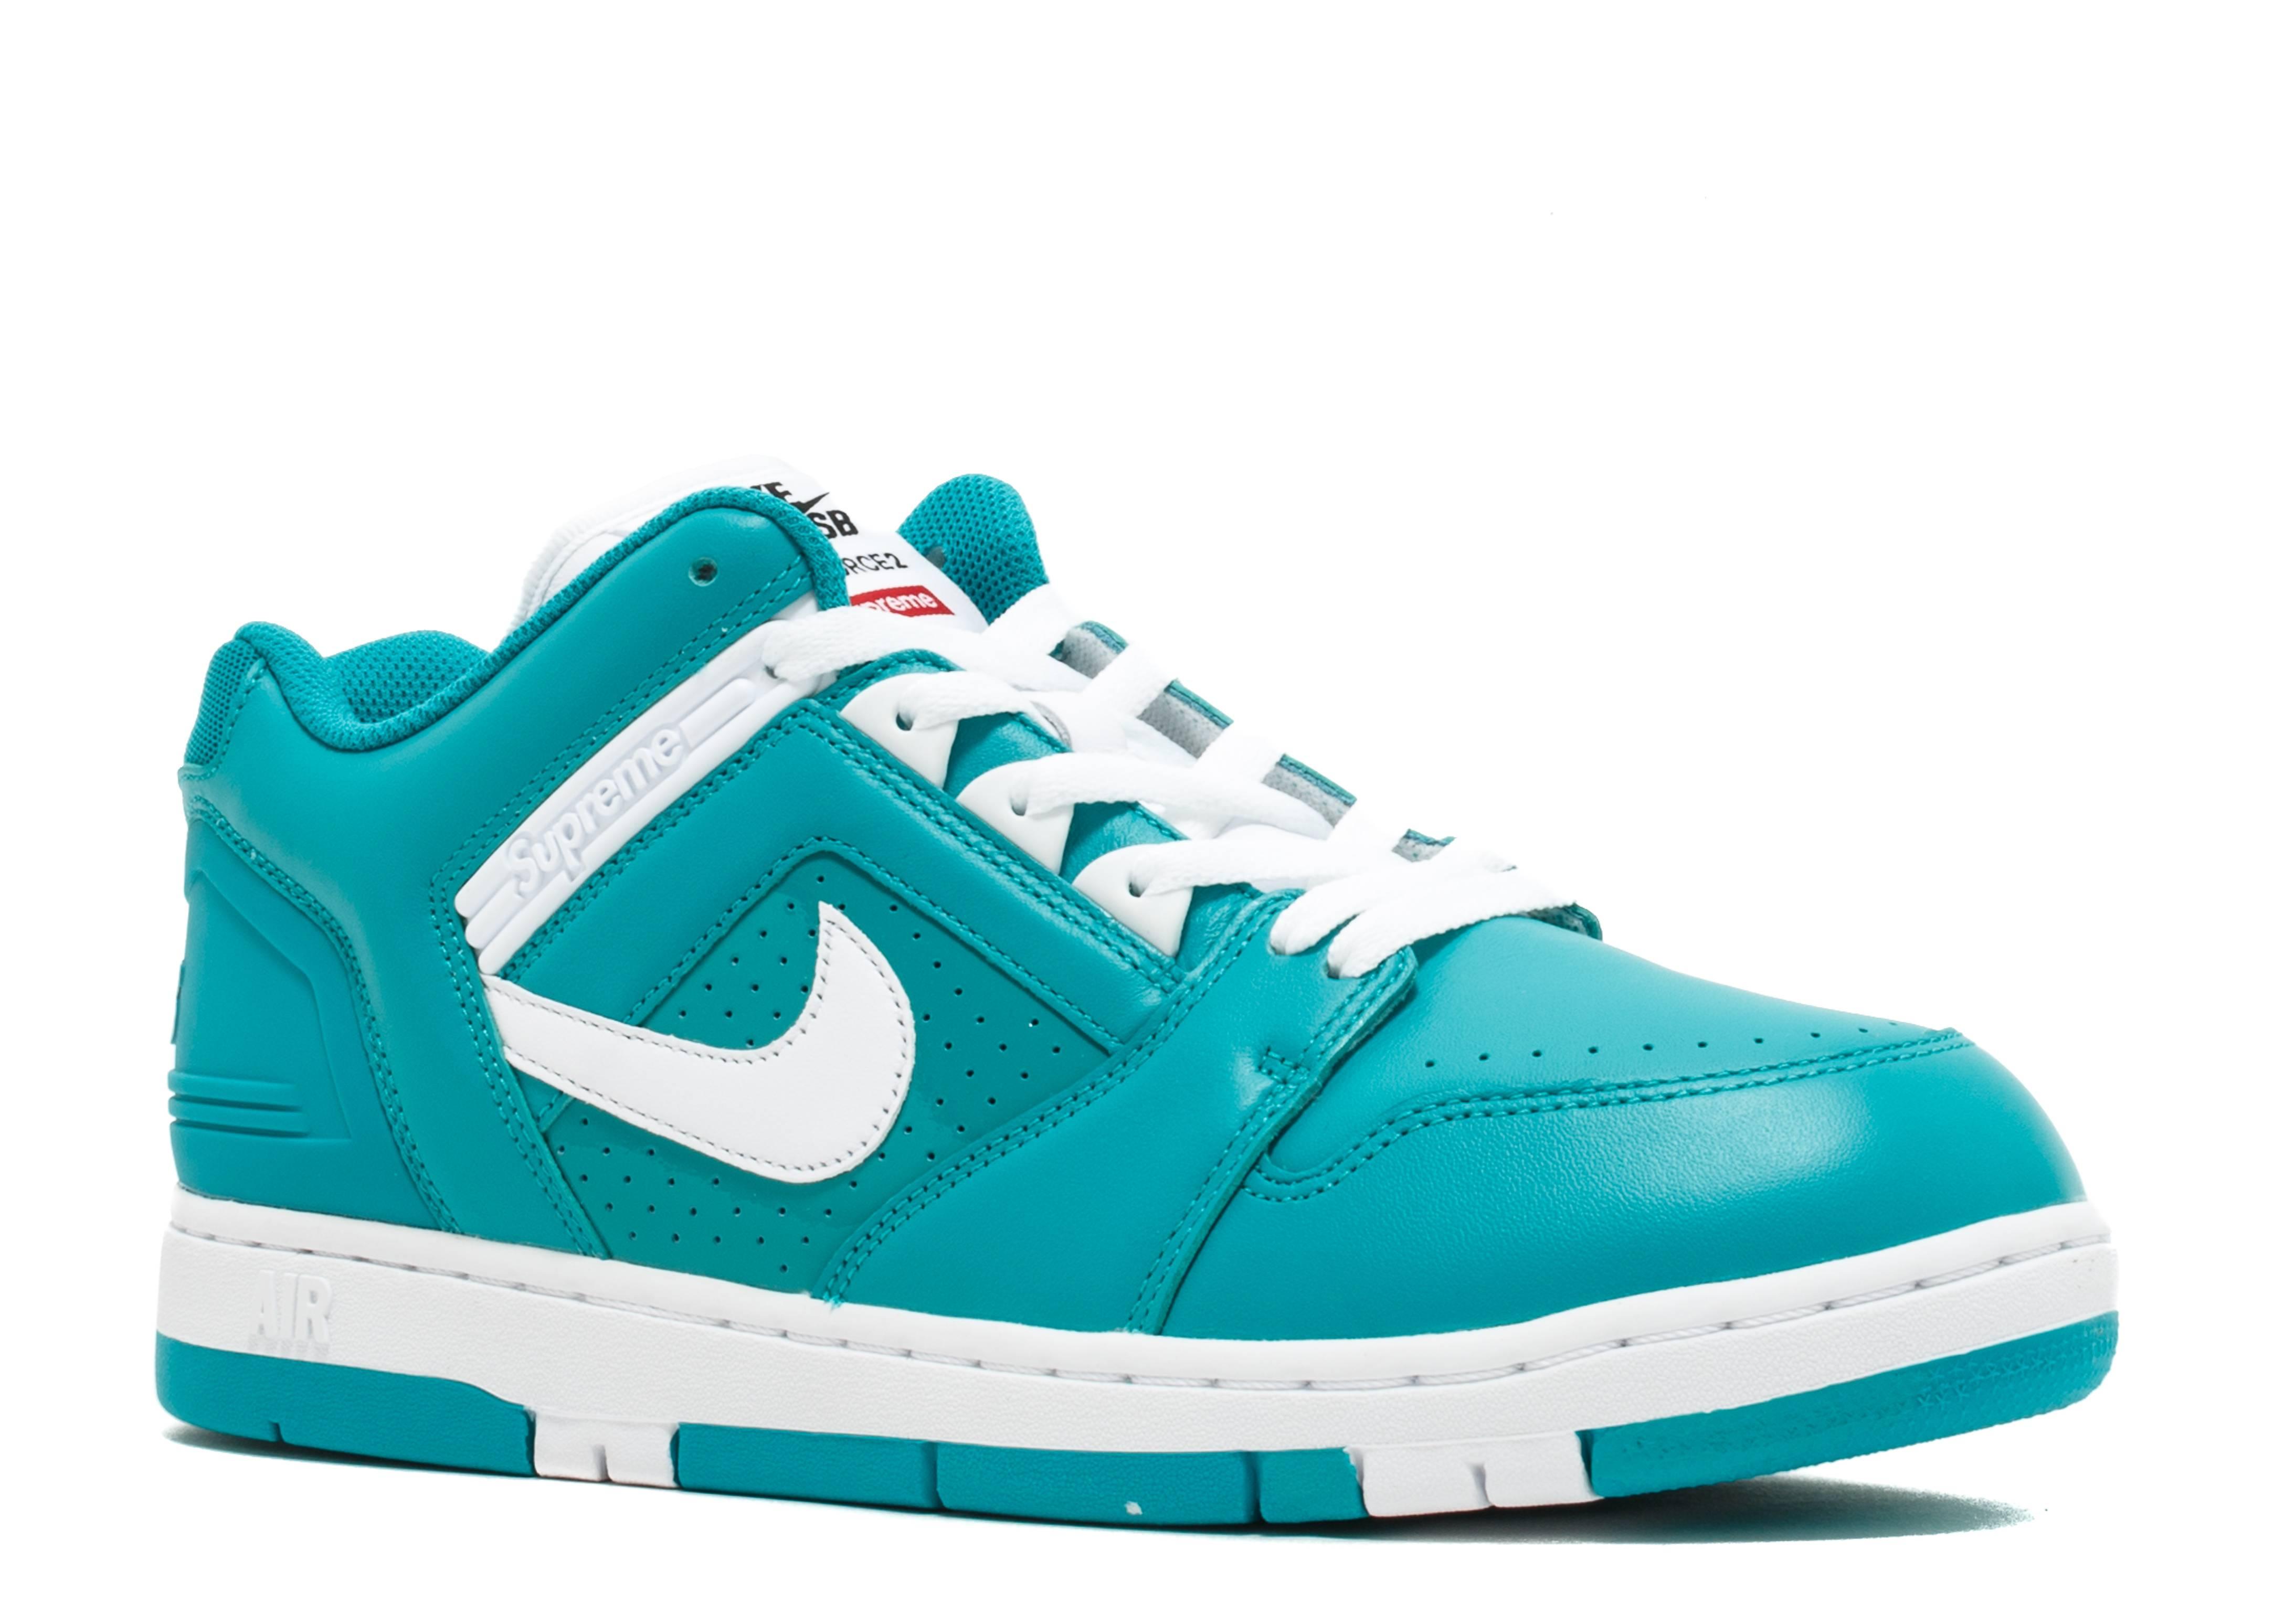 Nike Rubber Sb Af2 Low 'supreme - Teal' Shoes - Size 9.5 in Blue for